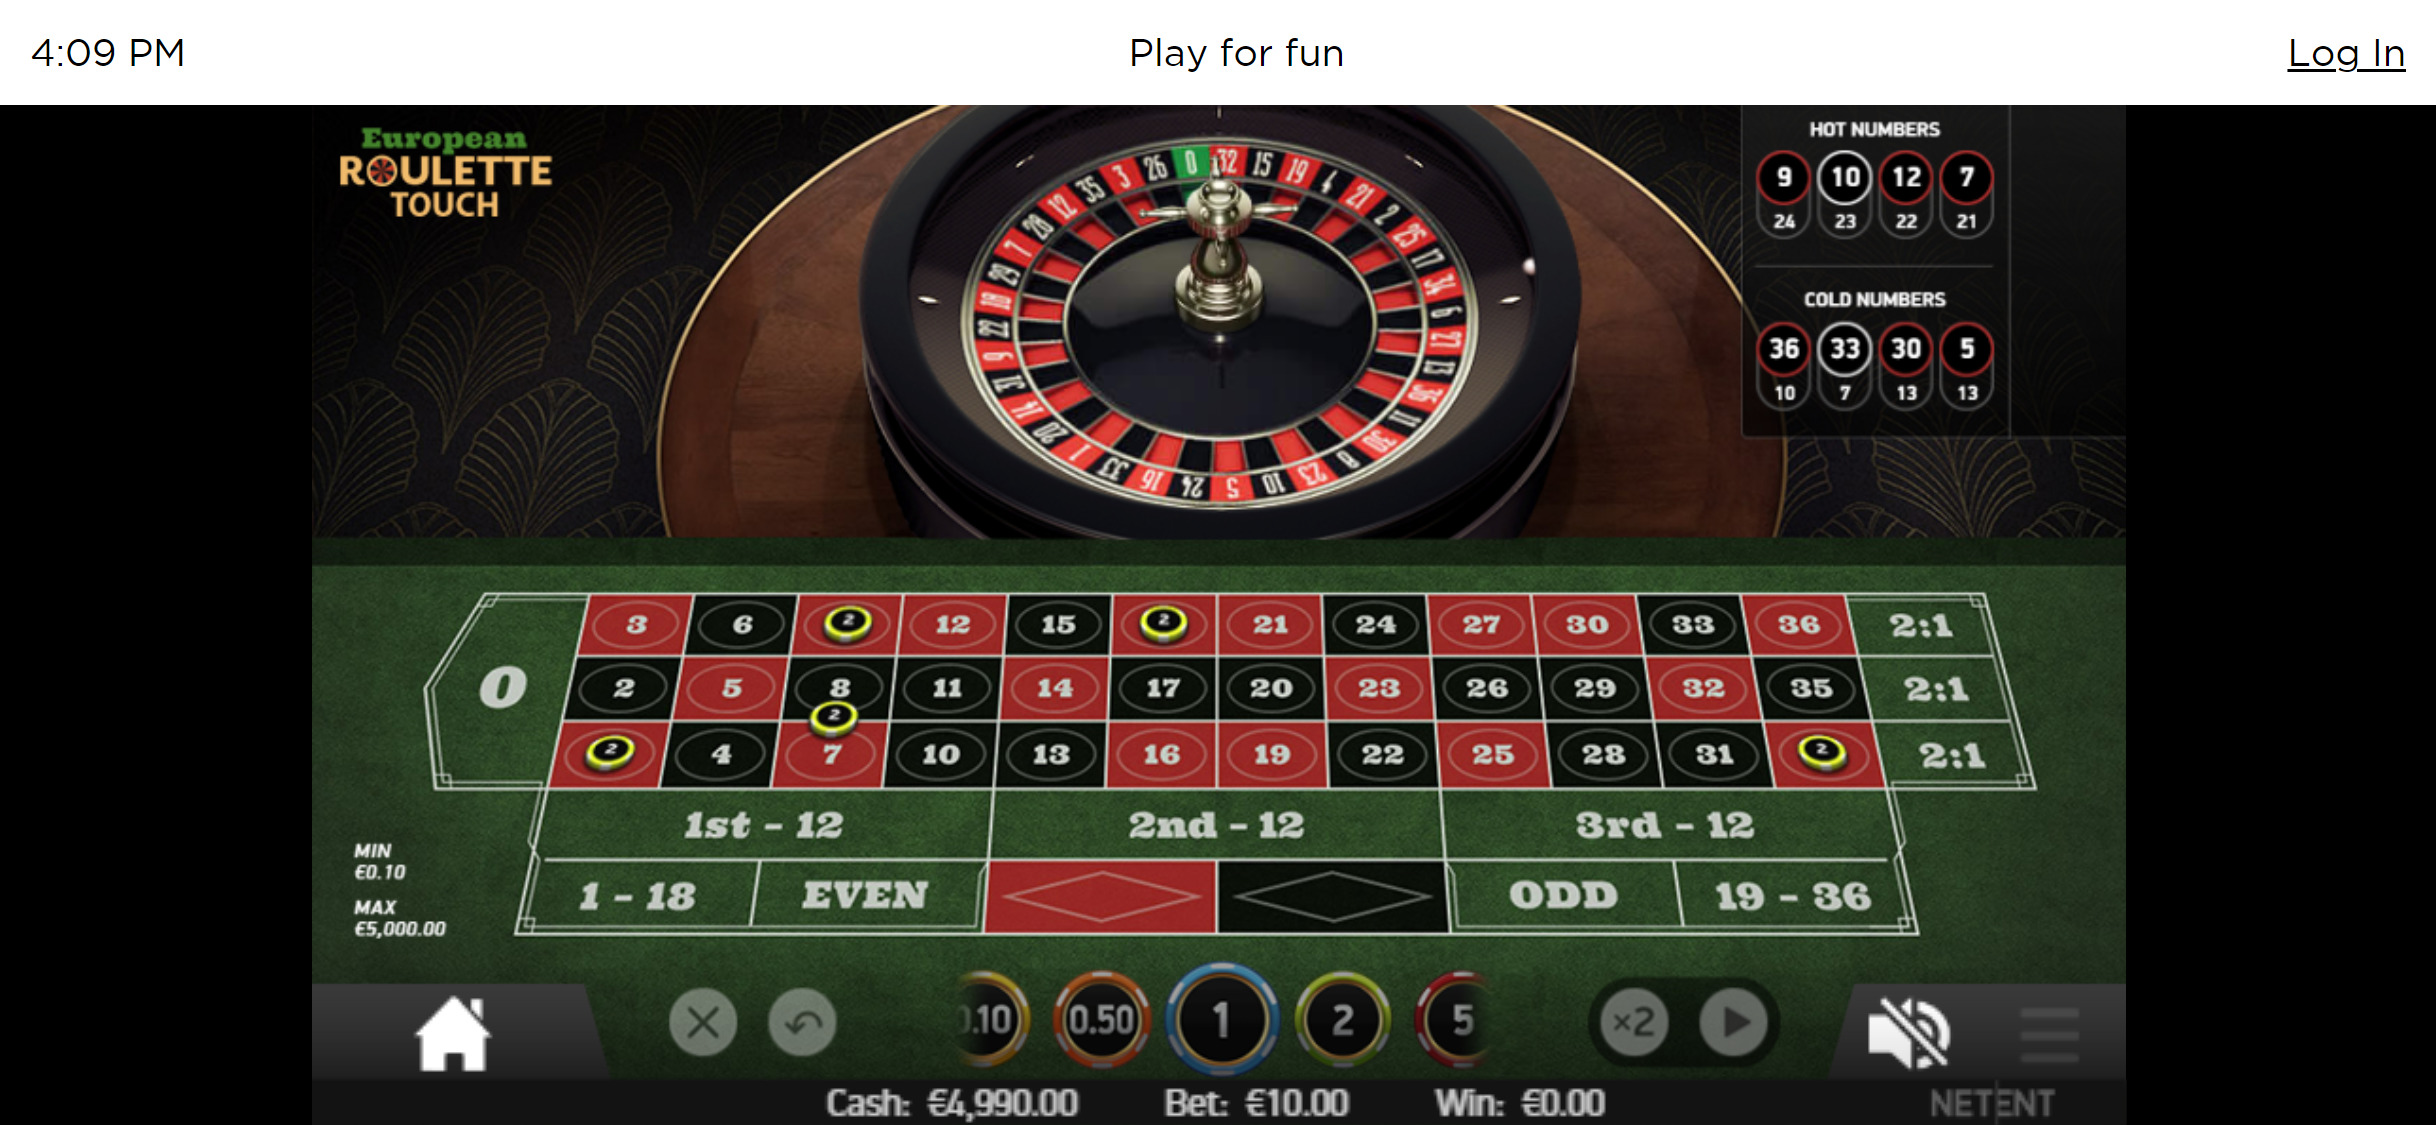 Sir Jackpot Casino Mobile Casino Games Review